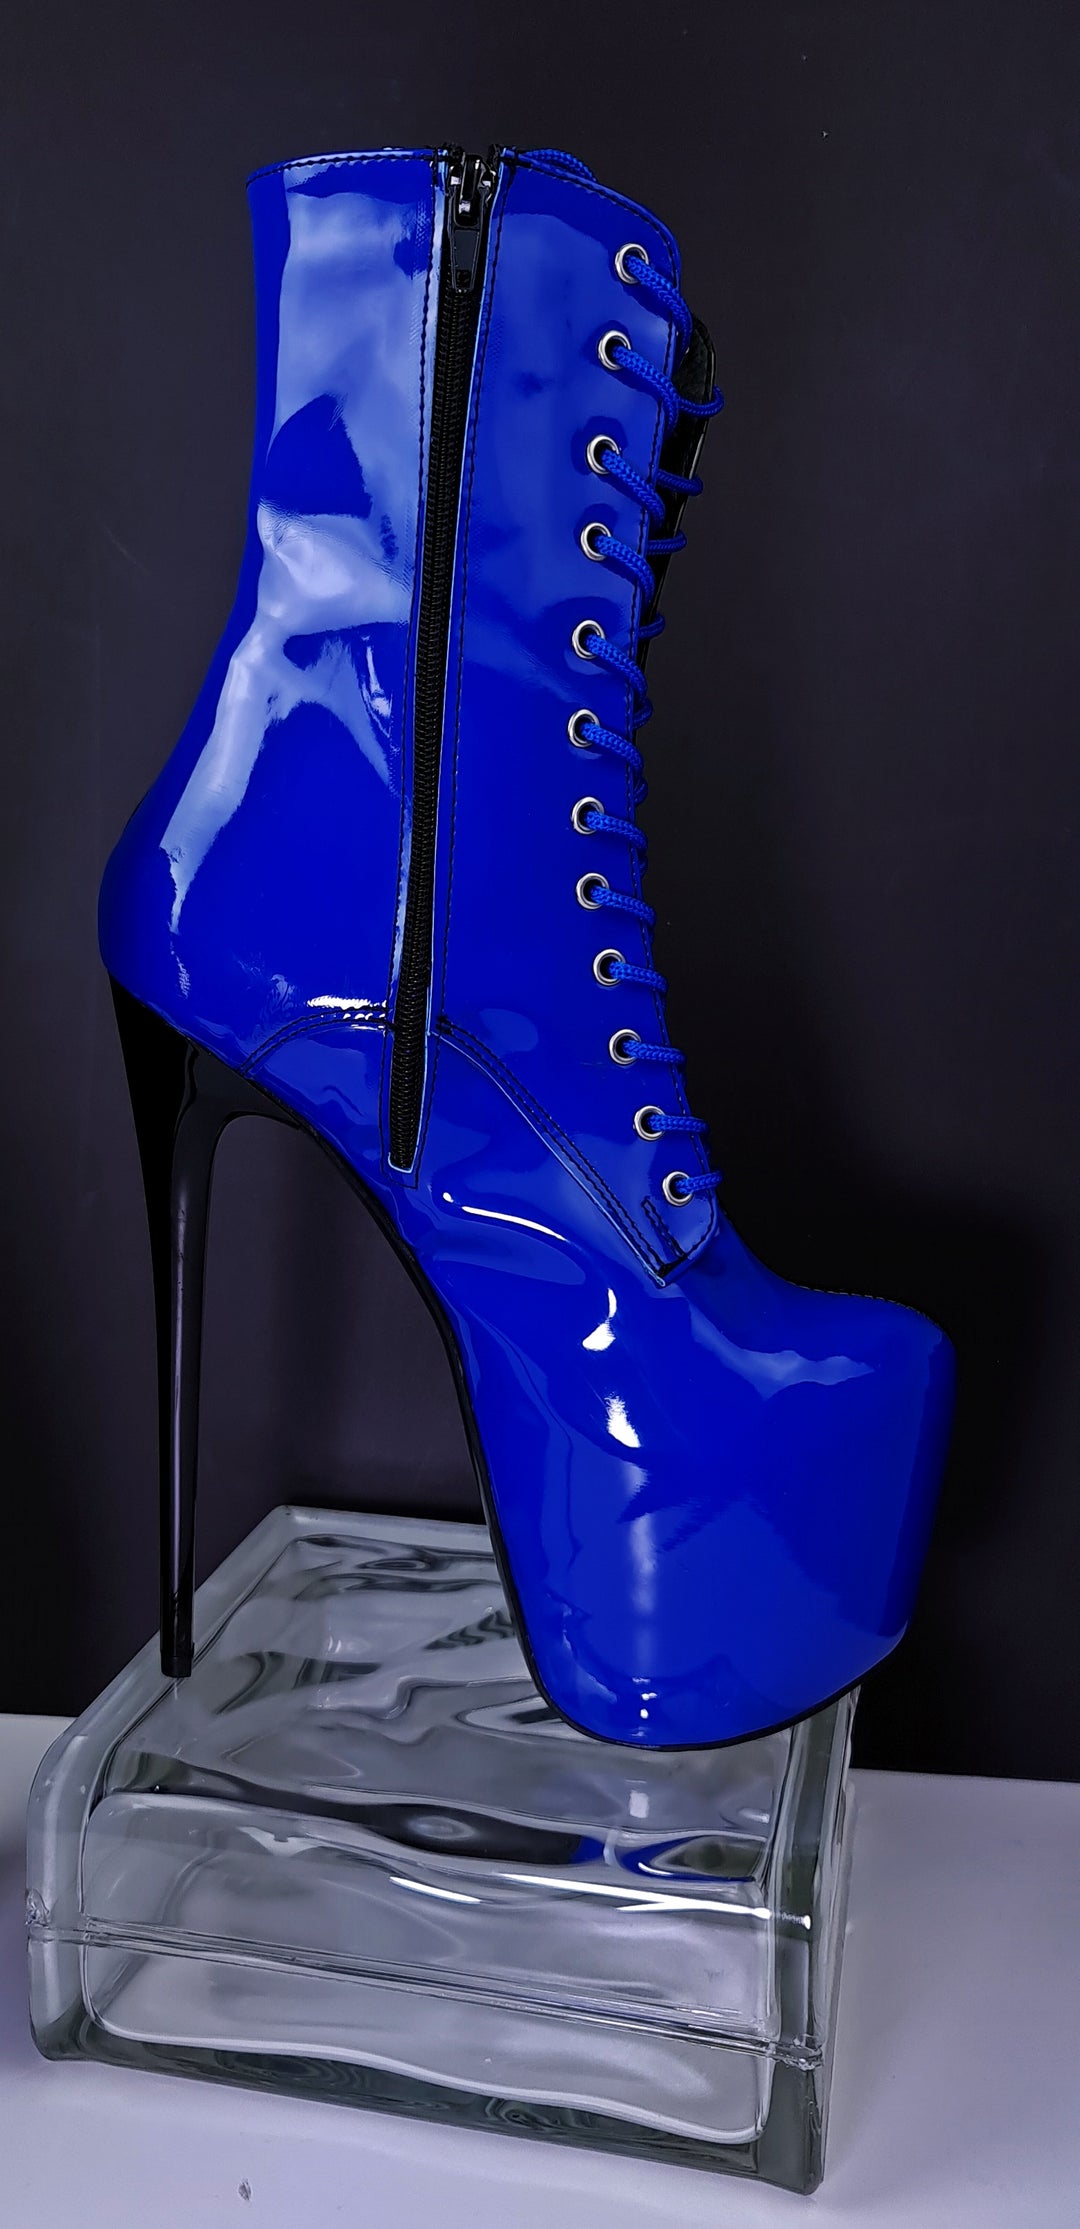 Multi Colour Double Side High Heel Boots Blue Black